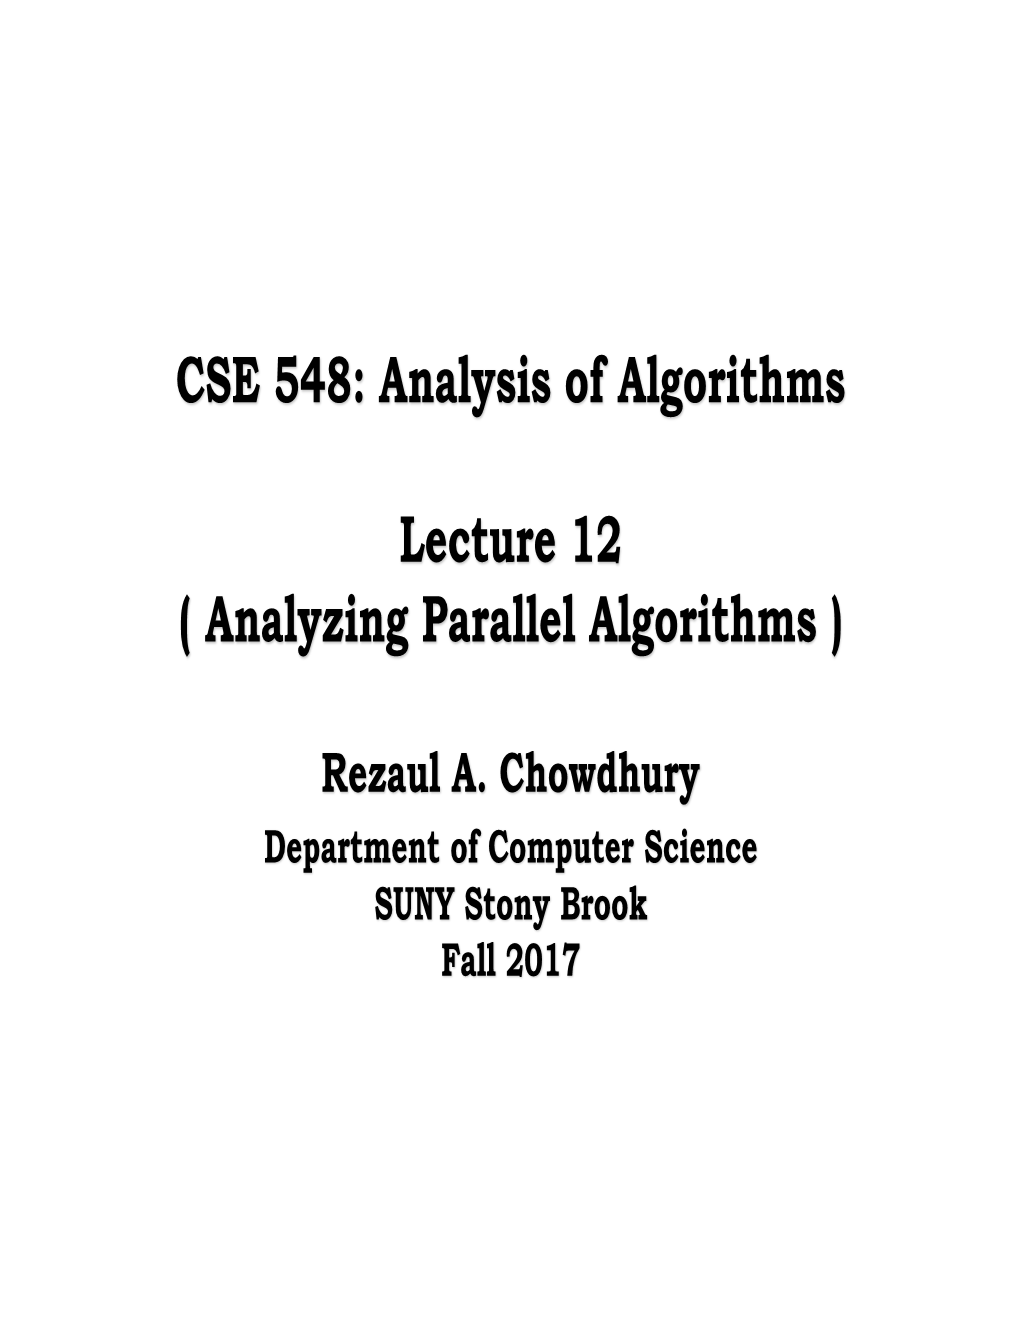 Analyzing Parallel Algorithms )